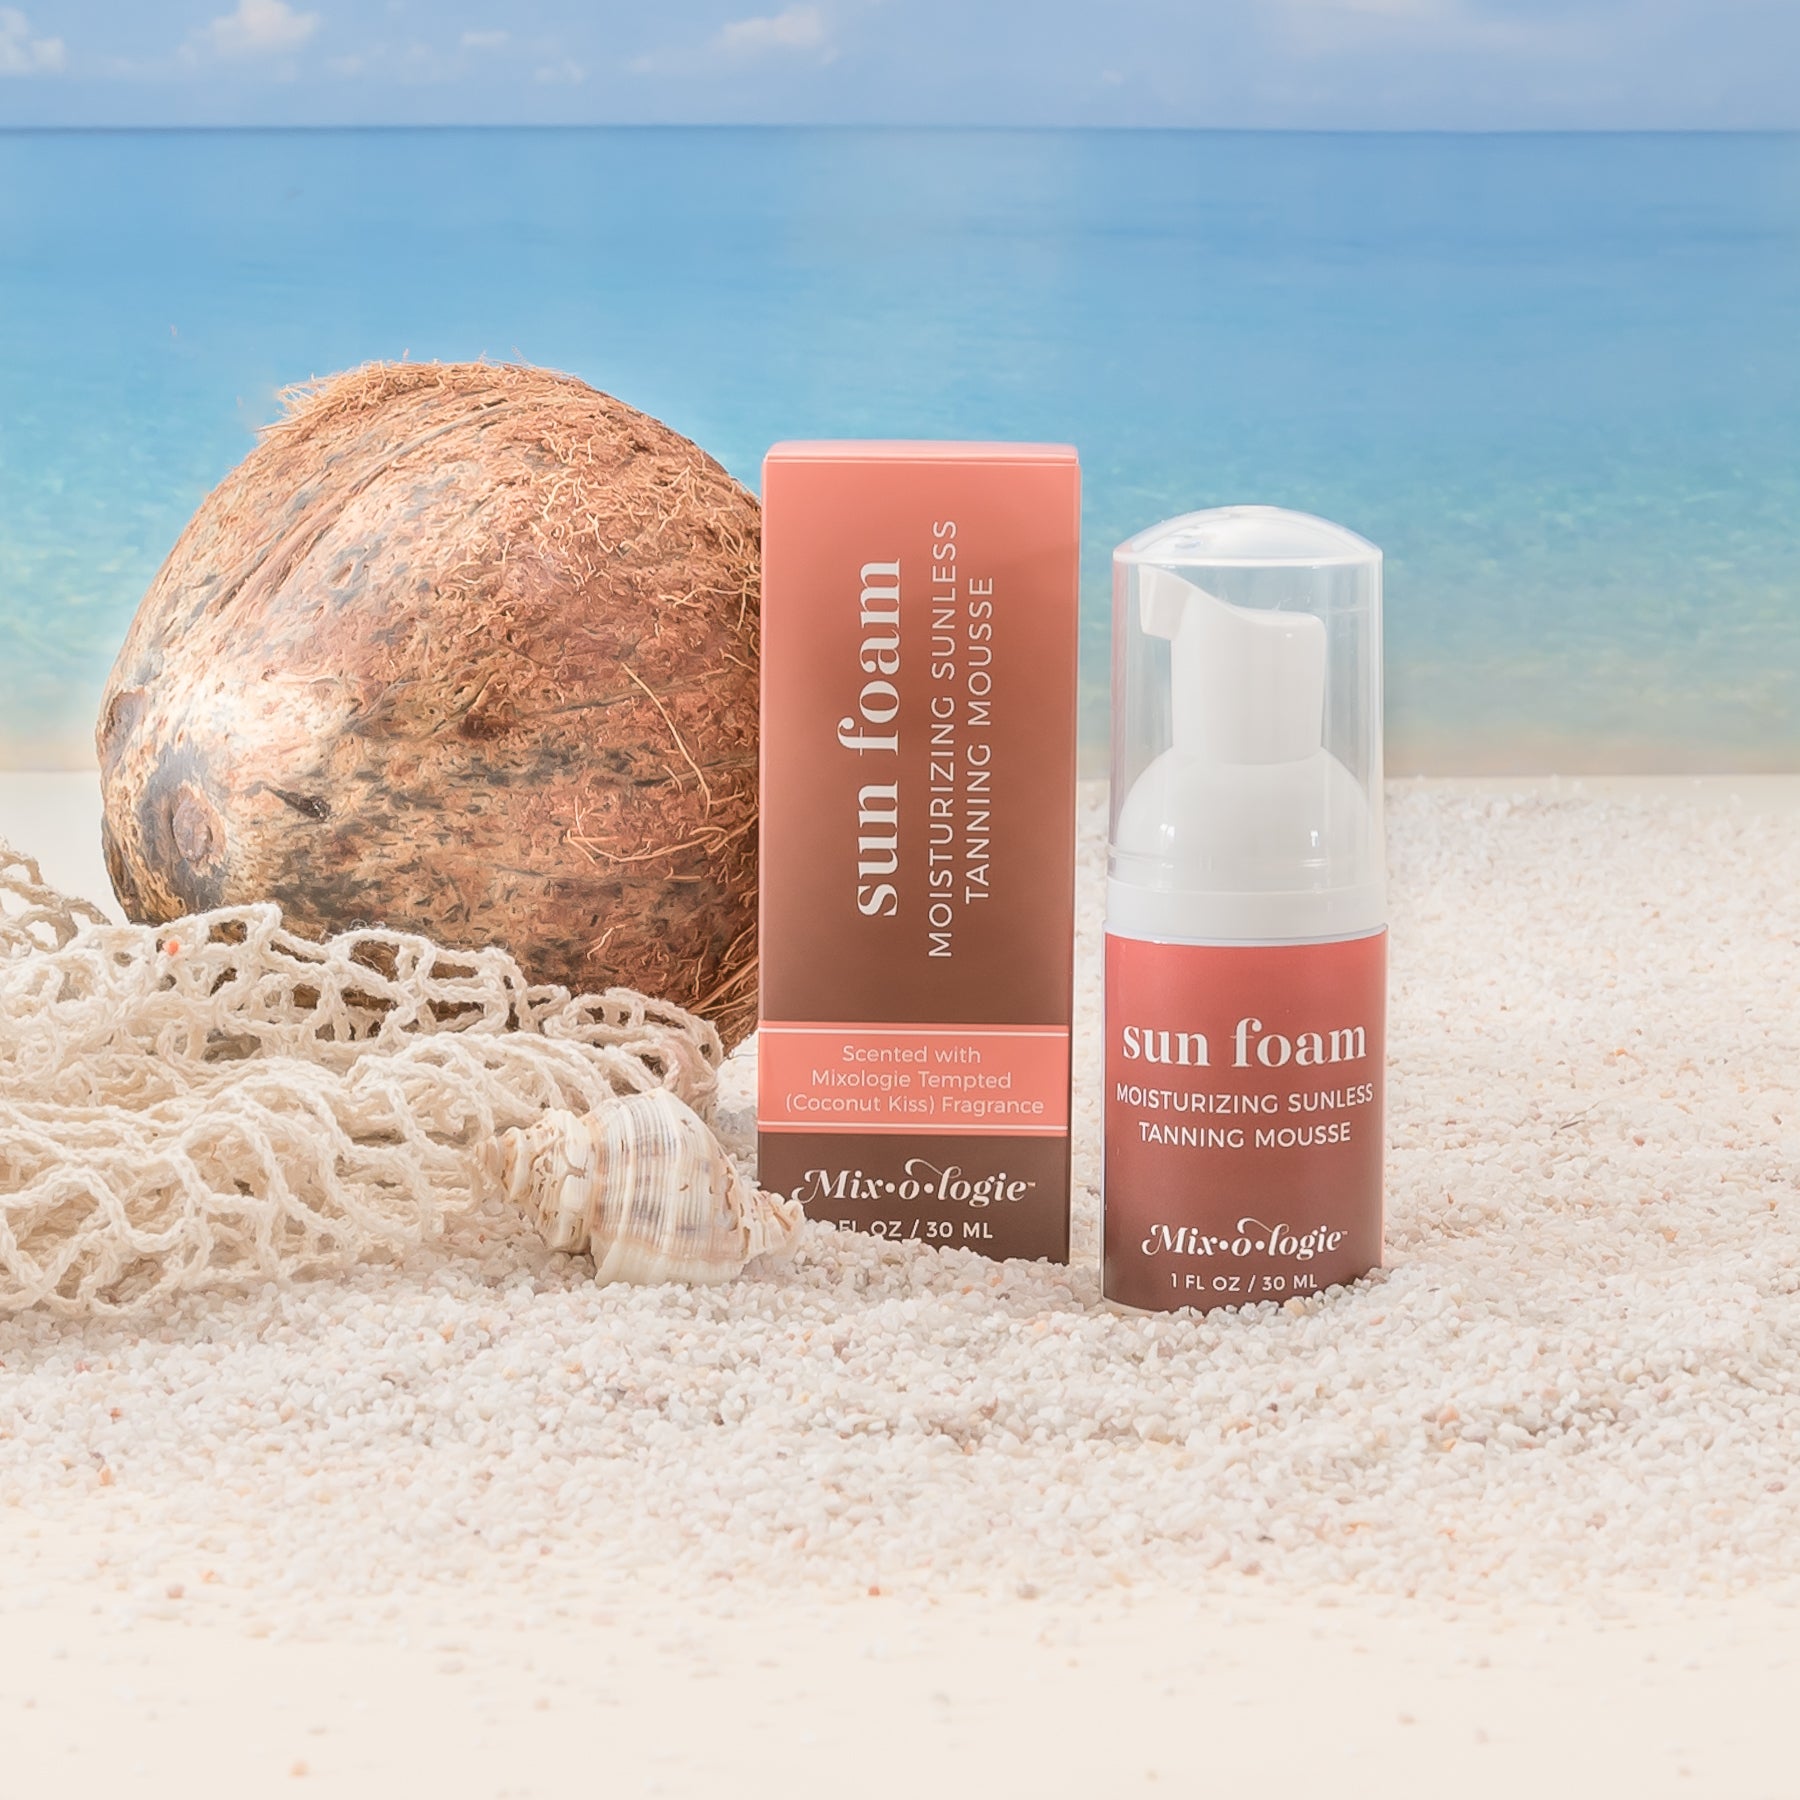 SunFoam Tanning Mousse Pre-Pack (Travel Size Bottles)